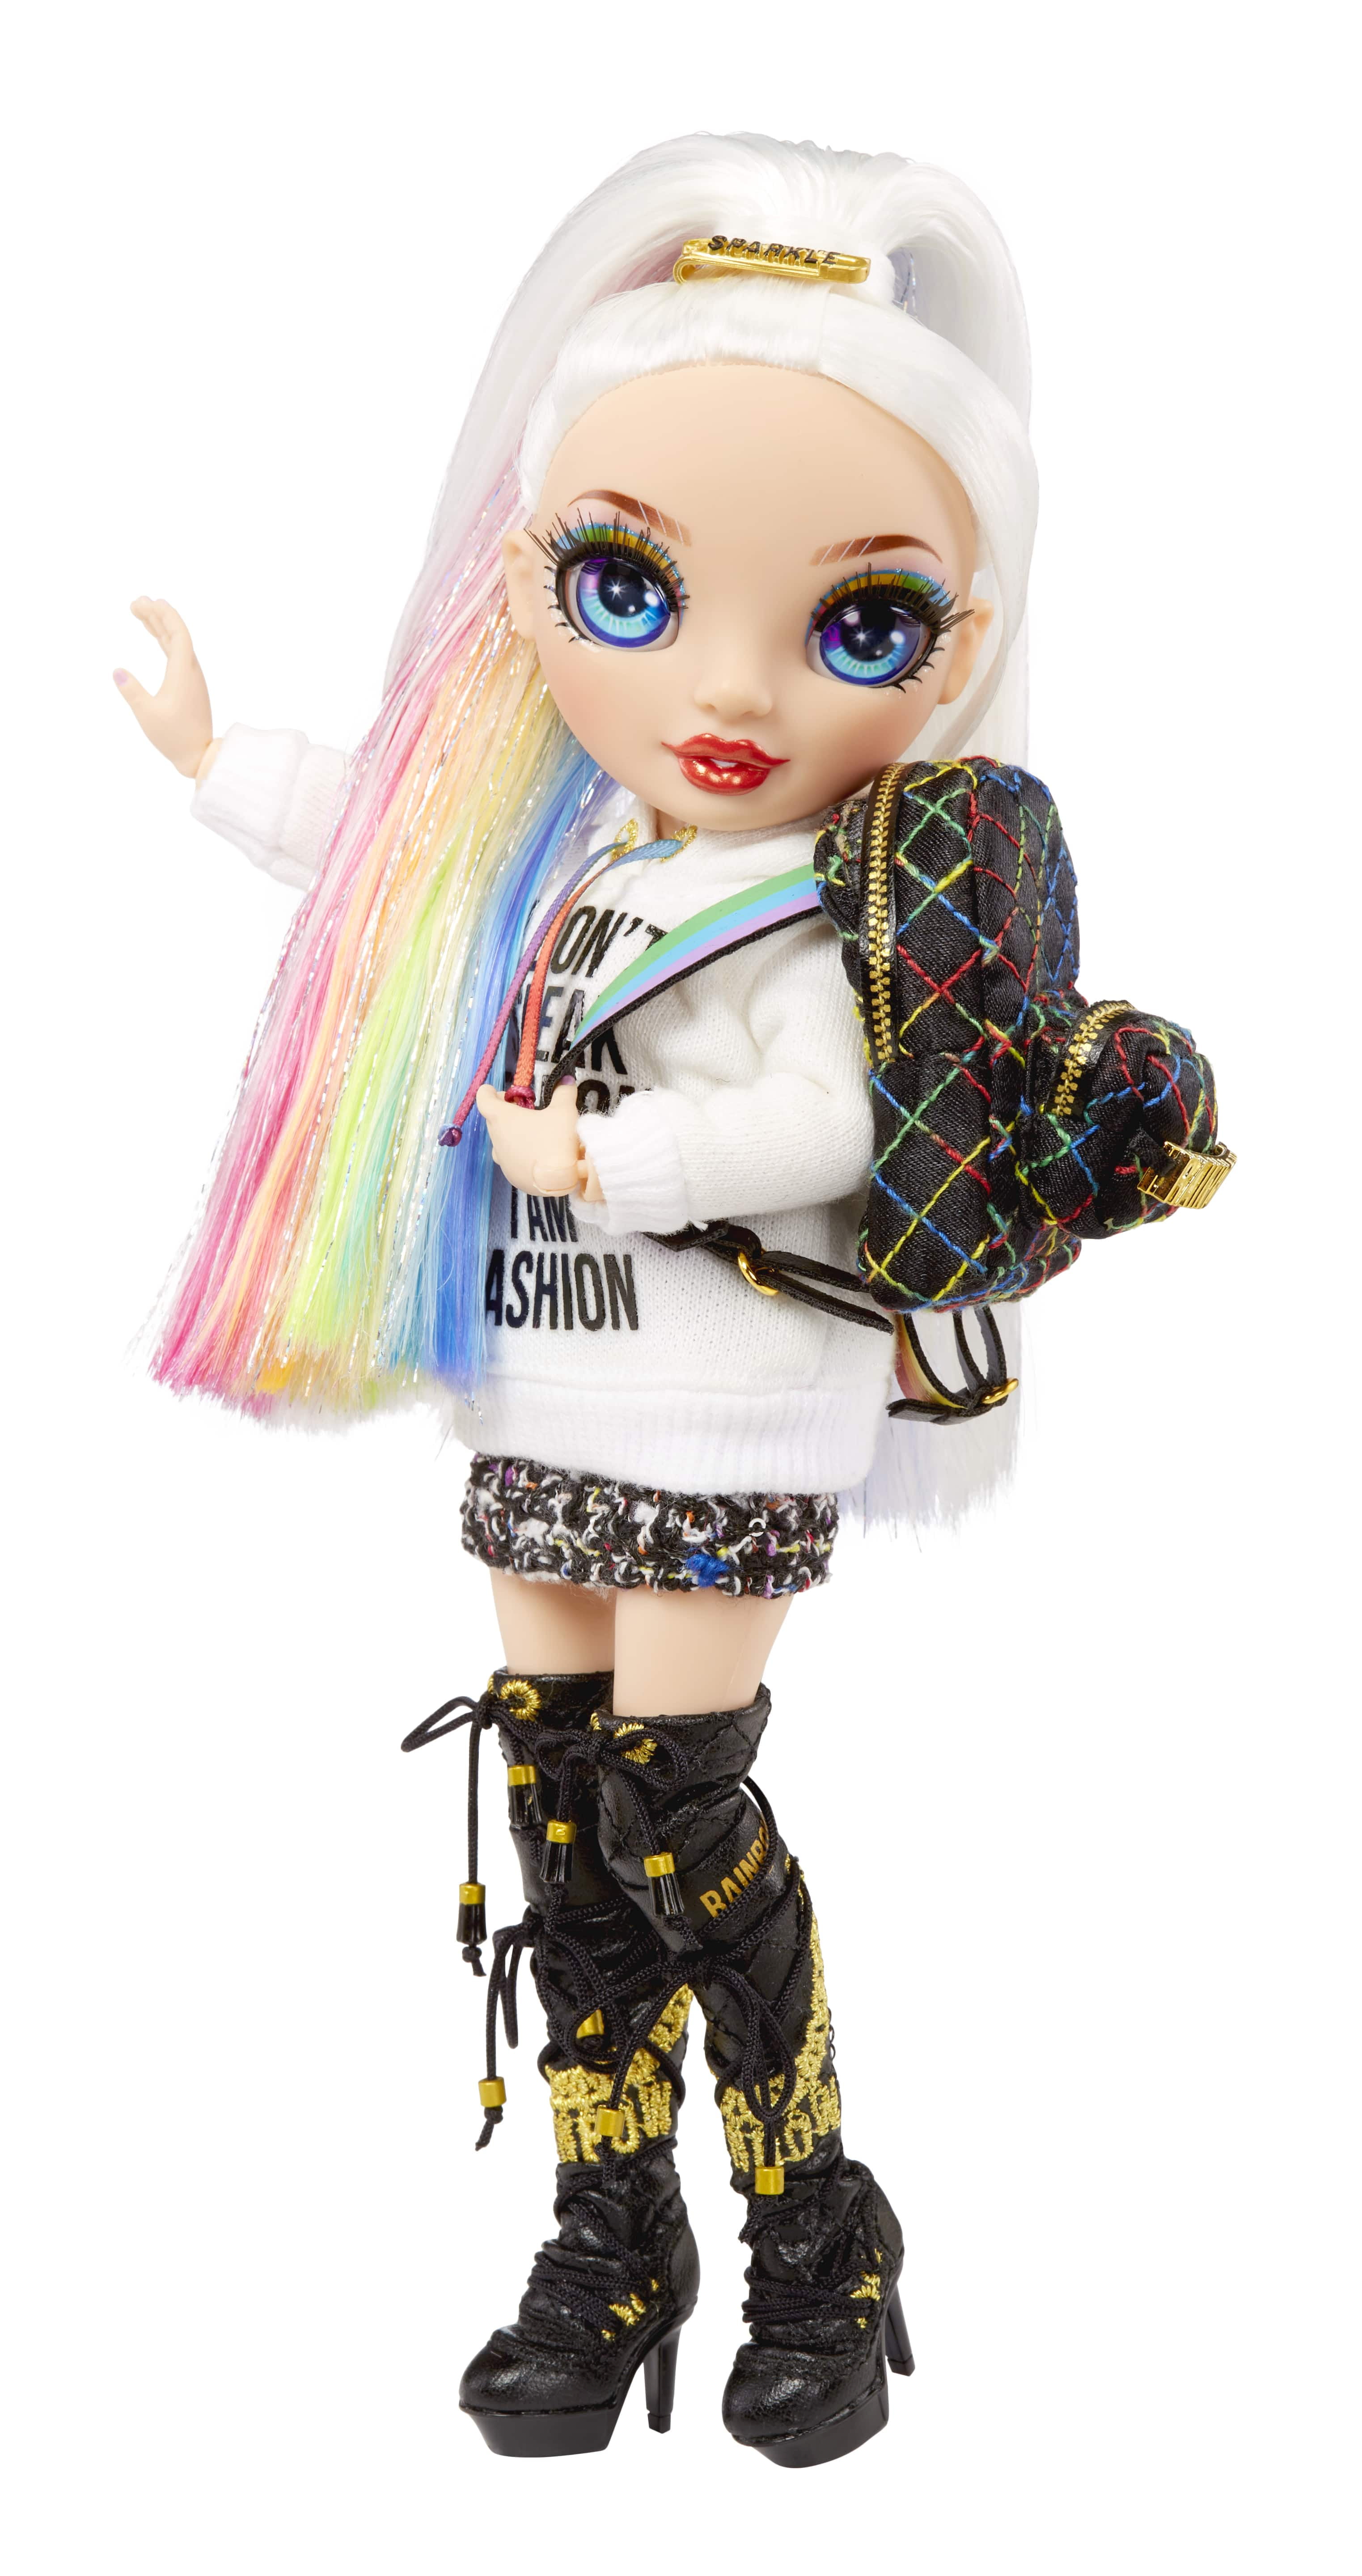 Rainbow High Amaya Raine is on sale for $15.88 